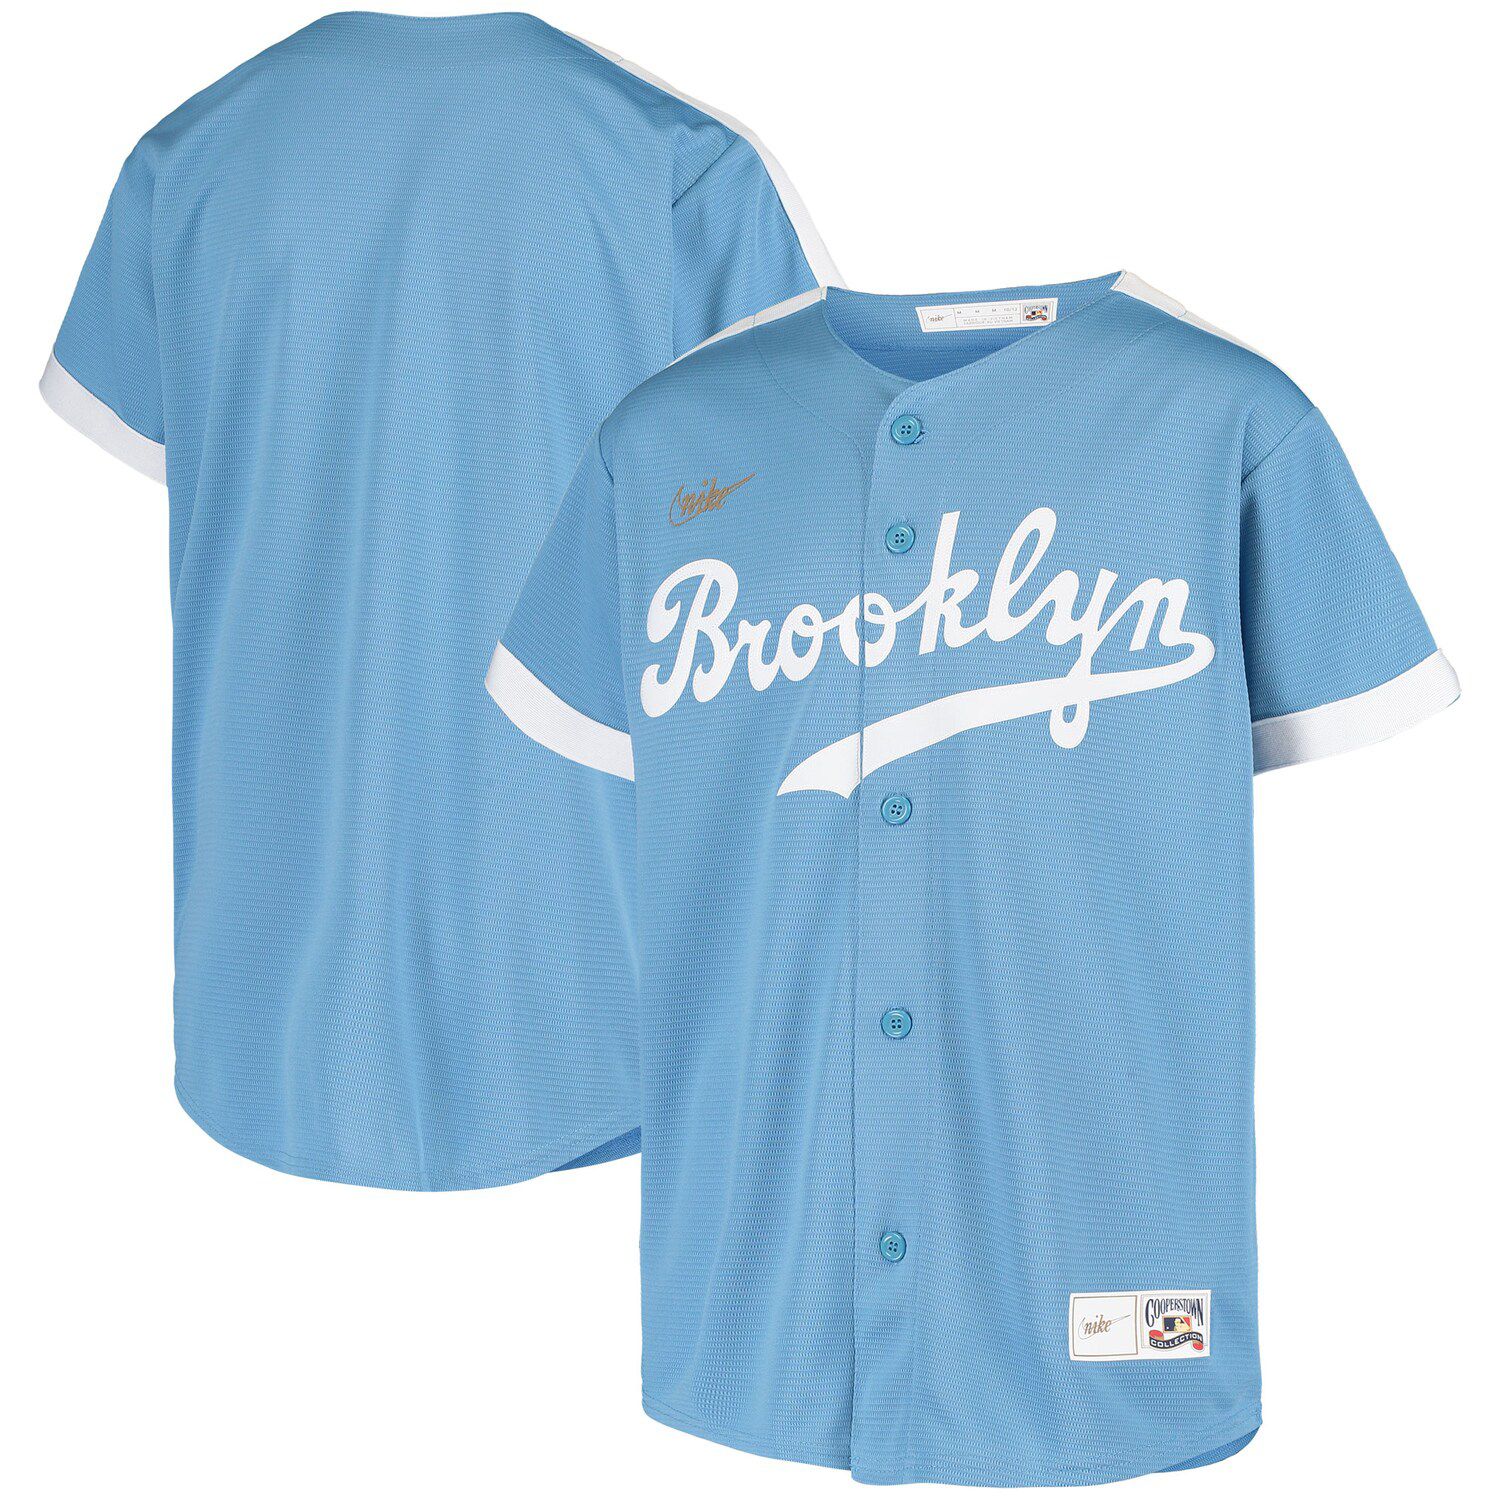 brooklyn dodgers light blue jersey